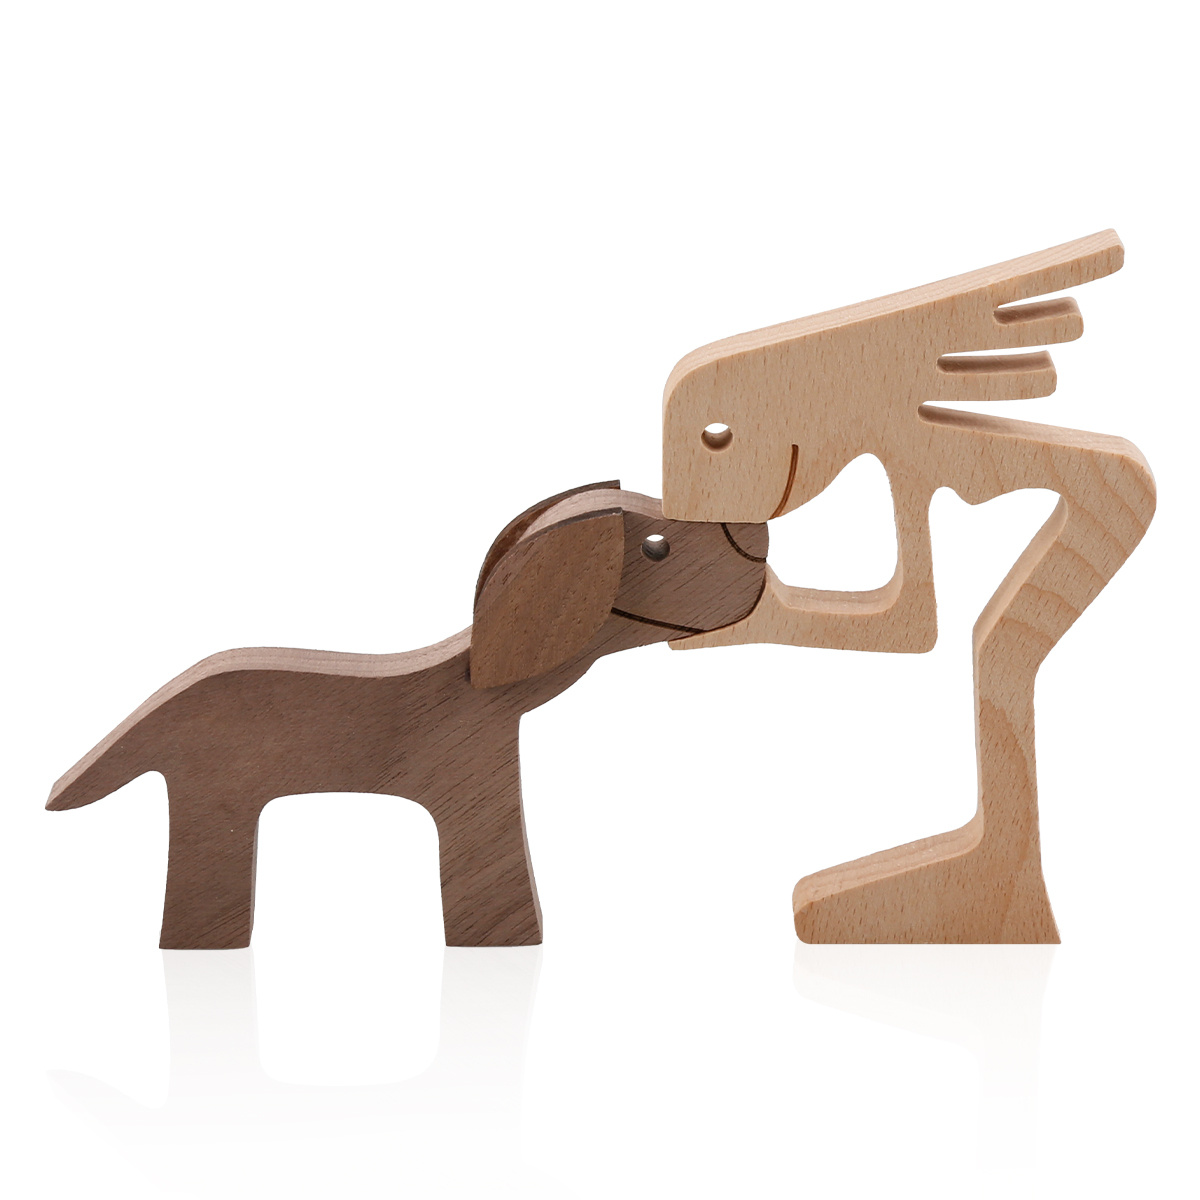 1pc 木製ペット彫刻犬子犬像 手作り木製装飾 かわいい子犬キティと人々